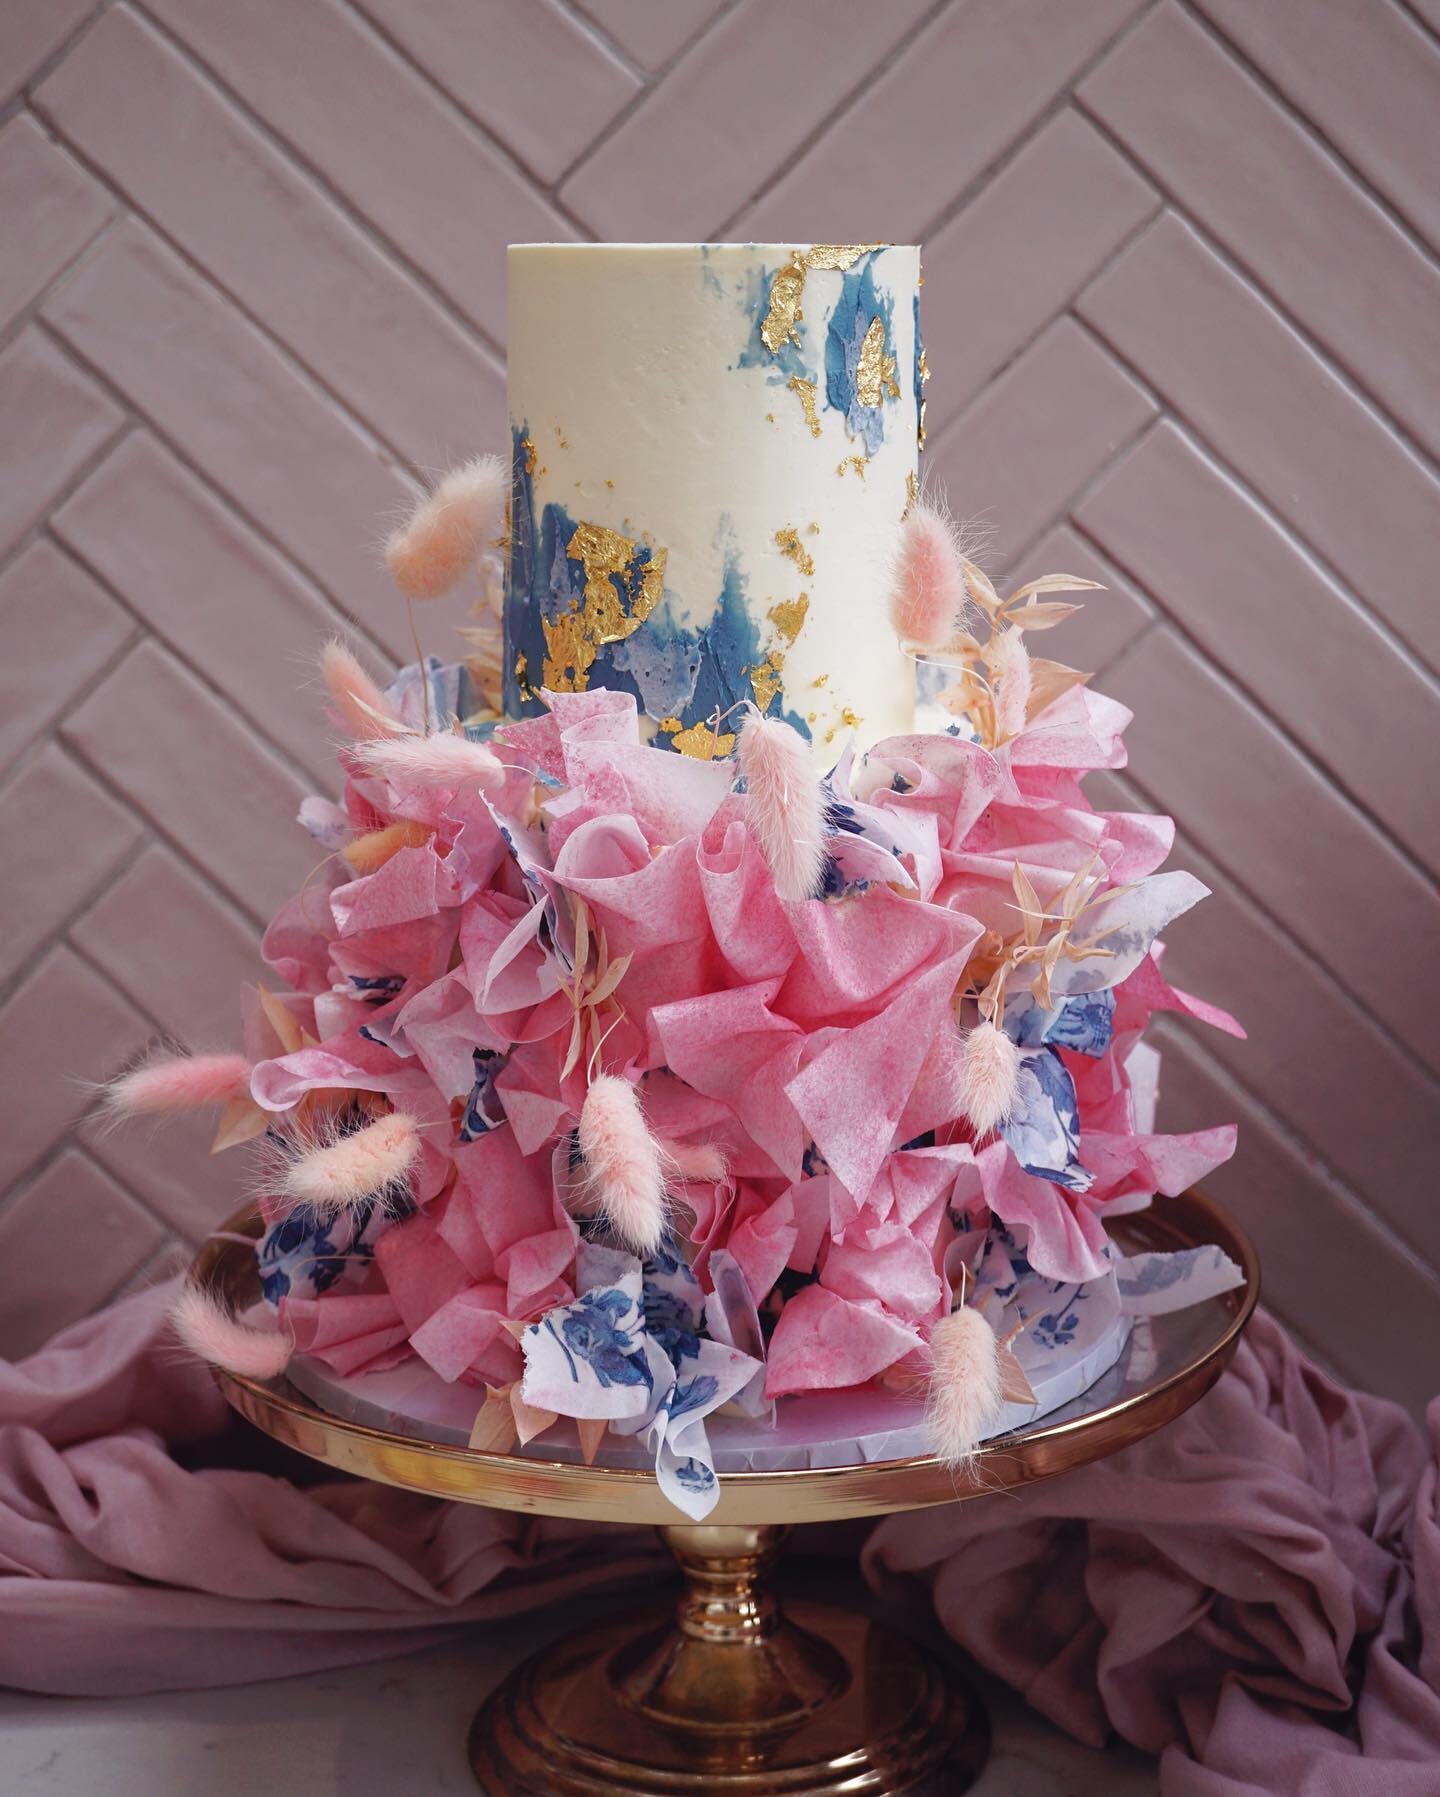 🌸 RUFFLE BABE 🌸
⠀⠀⠀⠀⠀⠀⠀⠀⠀
Wafer ruffle pink and blue dreams. 
⠀⠀⠀⠀⠀⠀⠀⠀⠀
birthdaycake #pastelcake #pinkcake #buttercream #dripcake #cake #cakemaker #cakedecorating #instacake #instacakes #baker #bake #girlscake #buttercreamcake #instabake #lovecake 